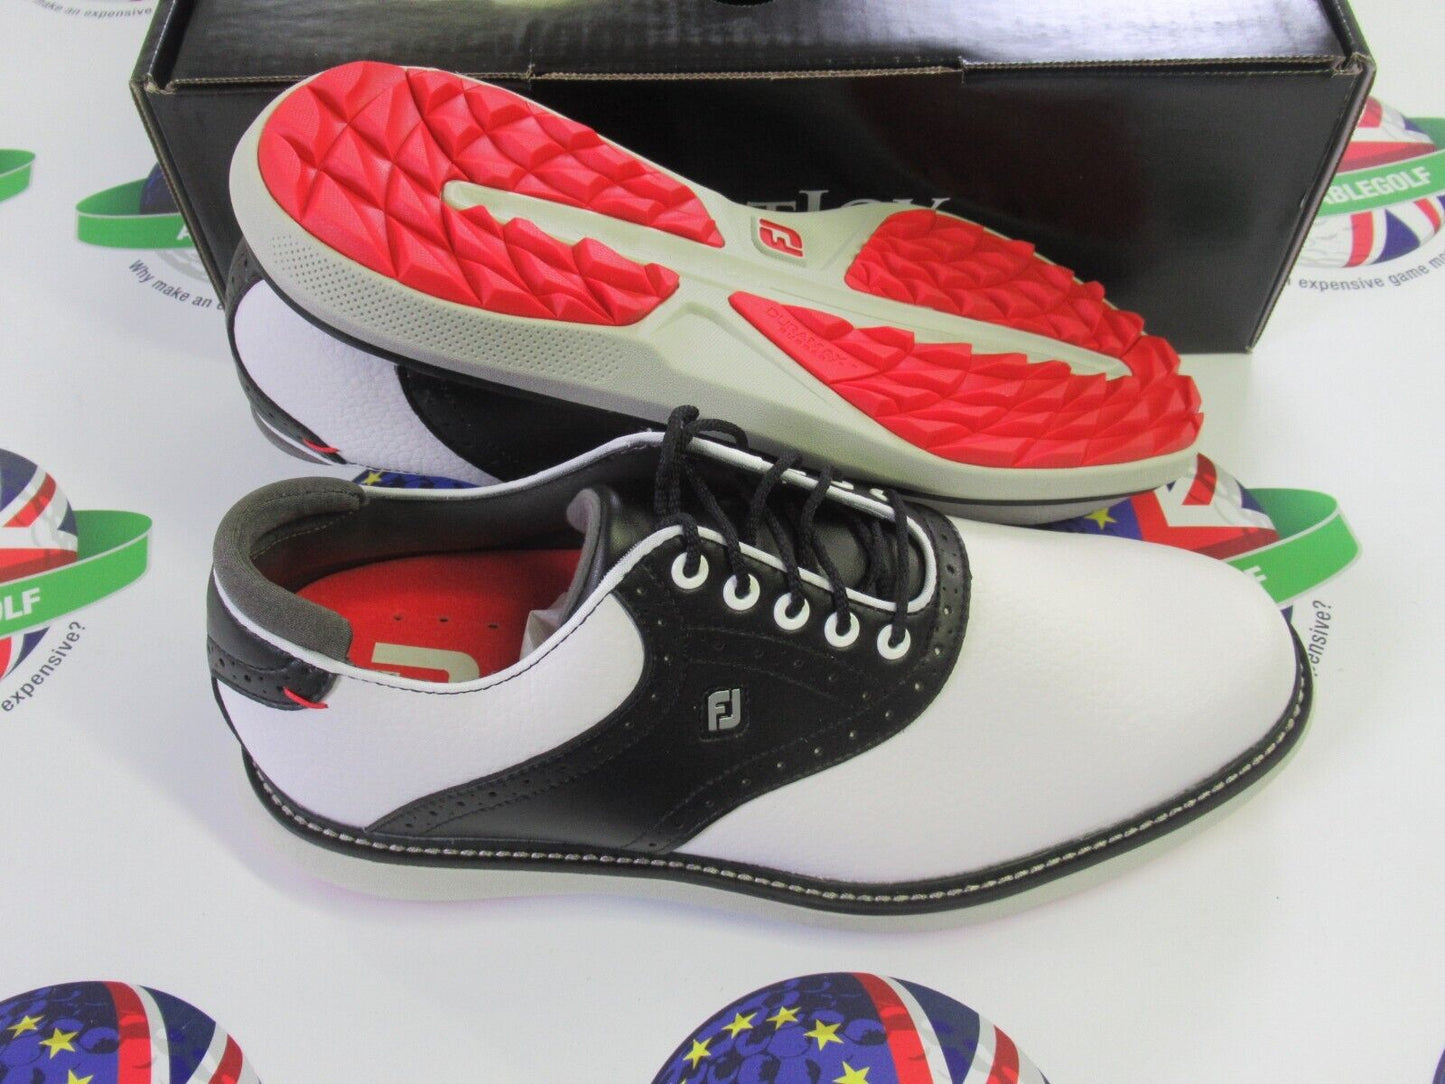 footjoy traditions waterproof golf shoes 57924k white/black uk size 9 medium